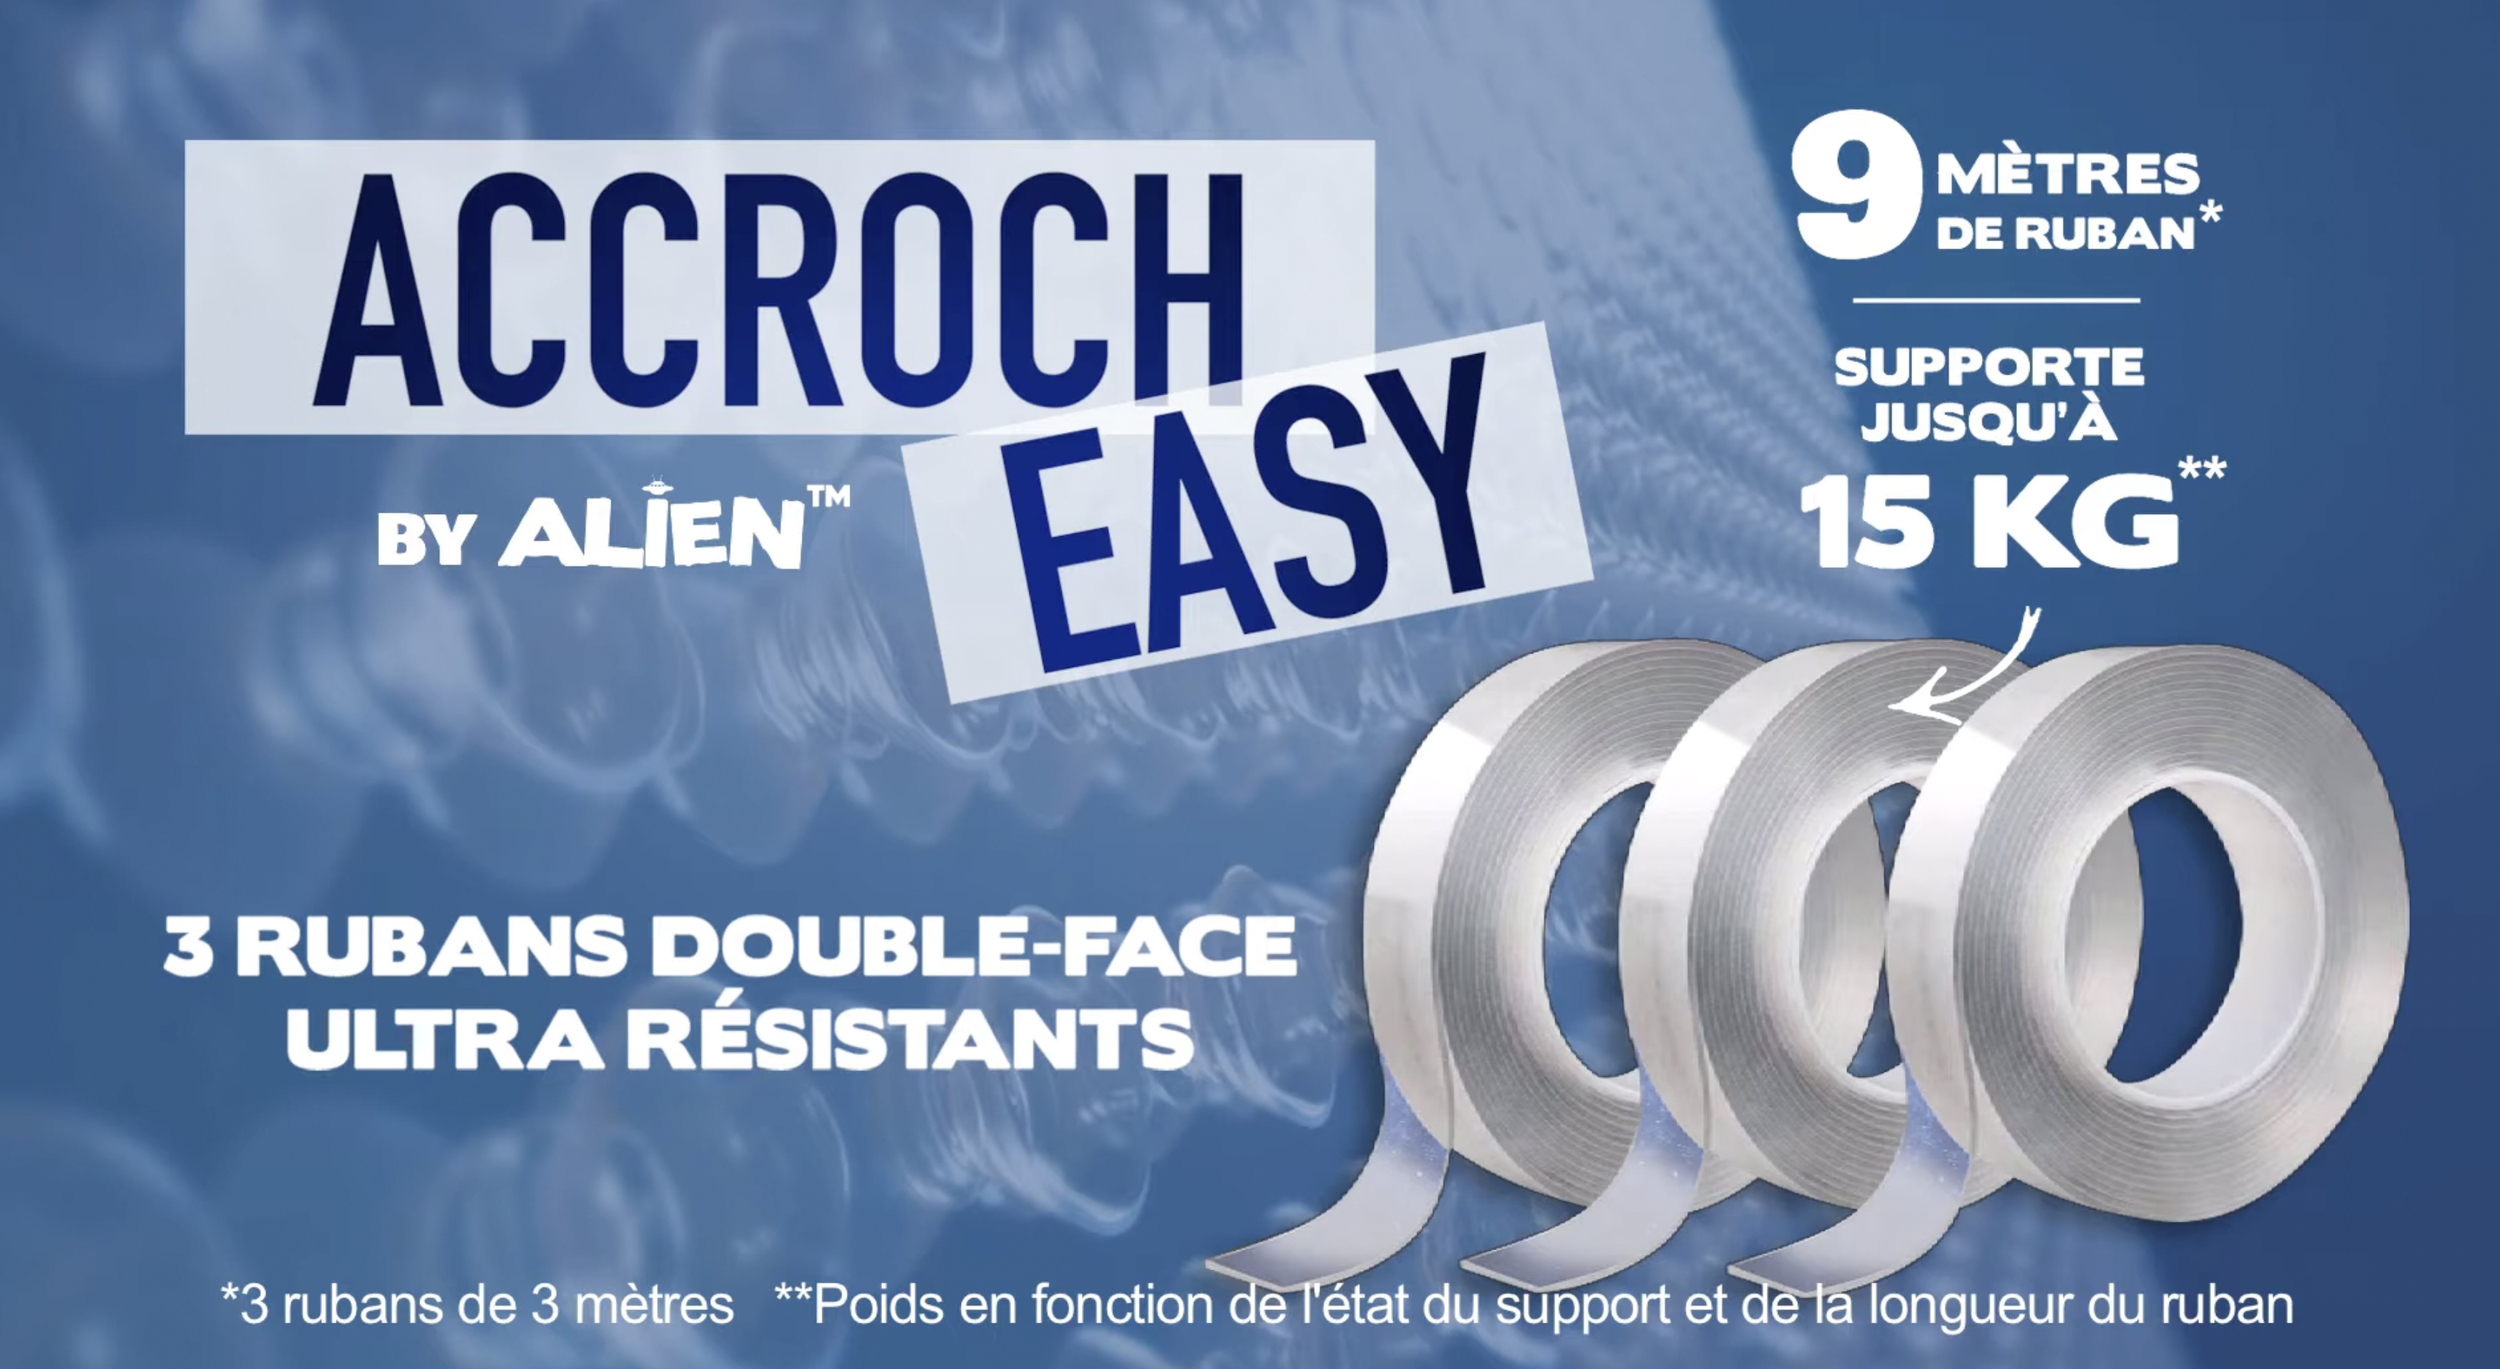 Accroch easy x3 by alien teleshopping ruban double face ultra resistant facile rapide et pratique